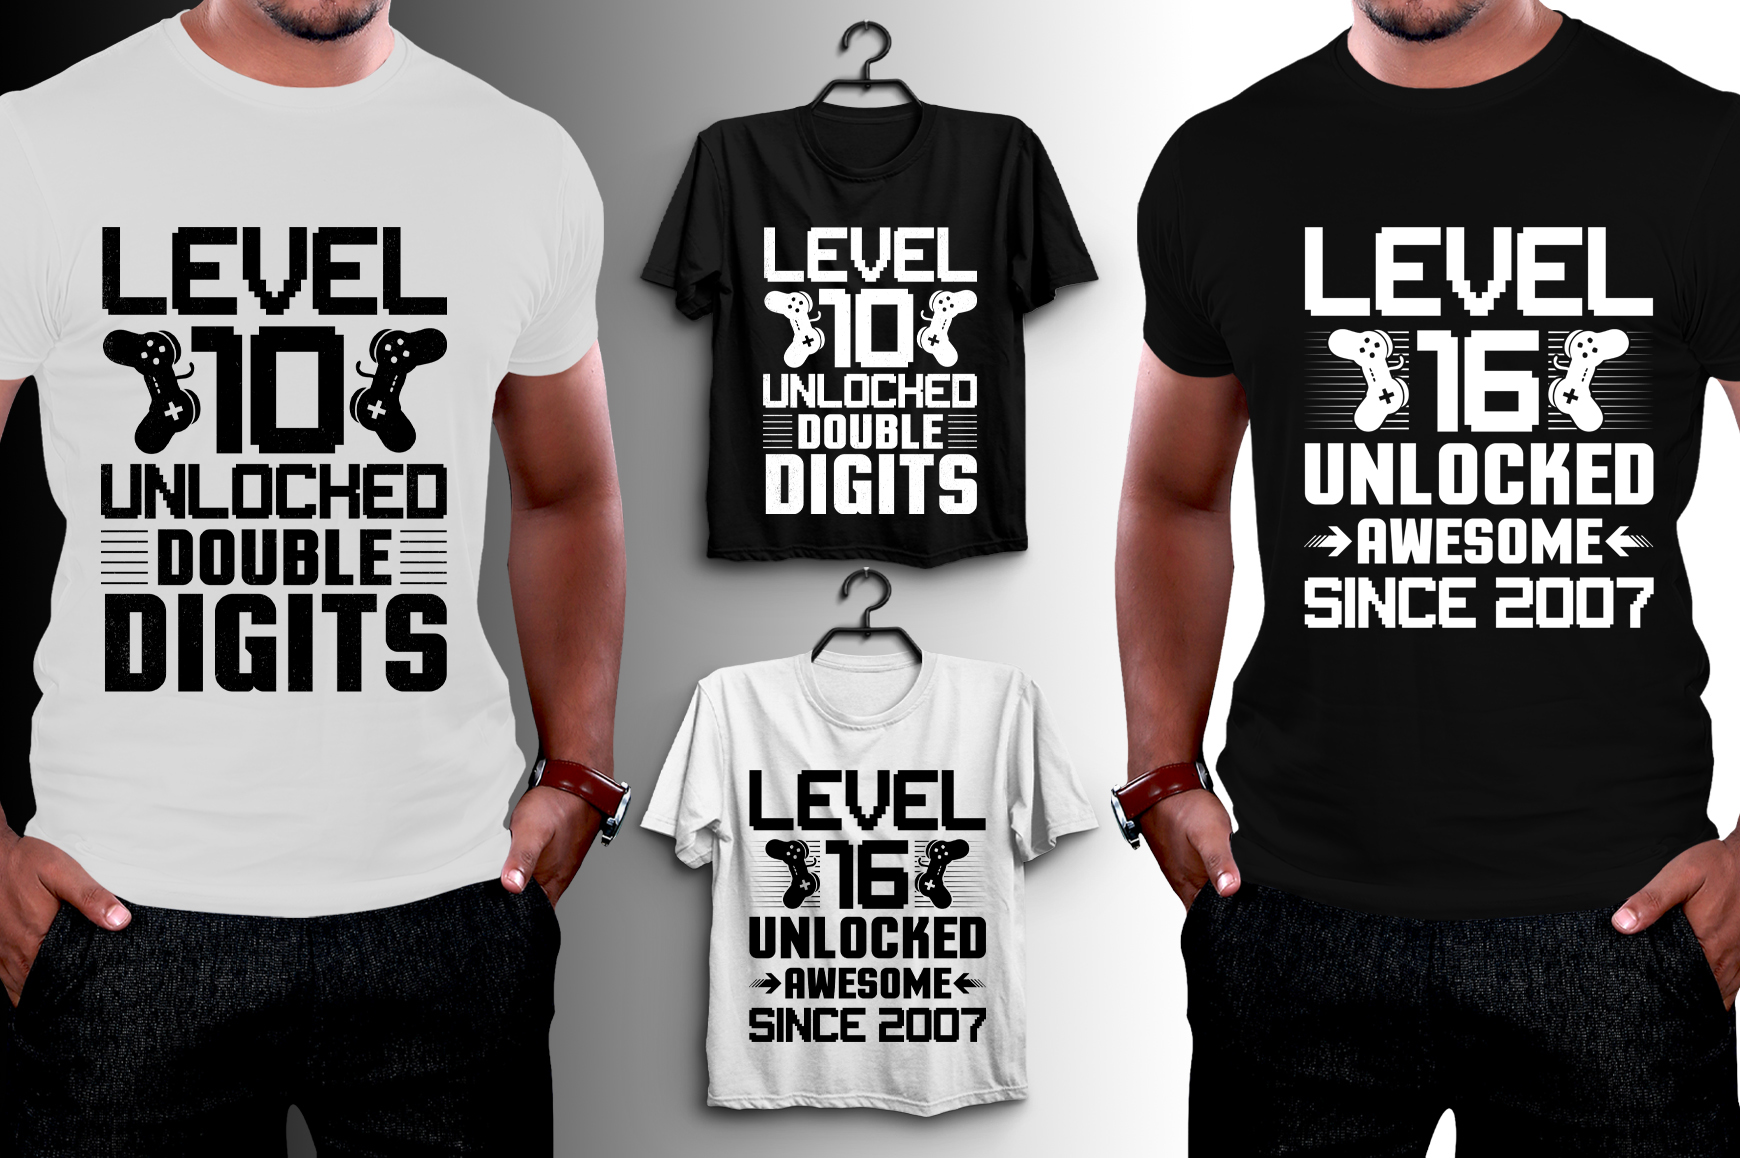 T-shirt Unlocked Design,Level Design,Level Unlocked Unlocked Unlocked T-Shirt,Level T-Shirt Design,Level Unlocked T-Shirt fabrica,Level TShirt,Level Level T-shirt TShirt Gifts,Level Pod,Level Unlocked,Level creative T-shirt Unlocked Unlocked Unlocked